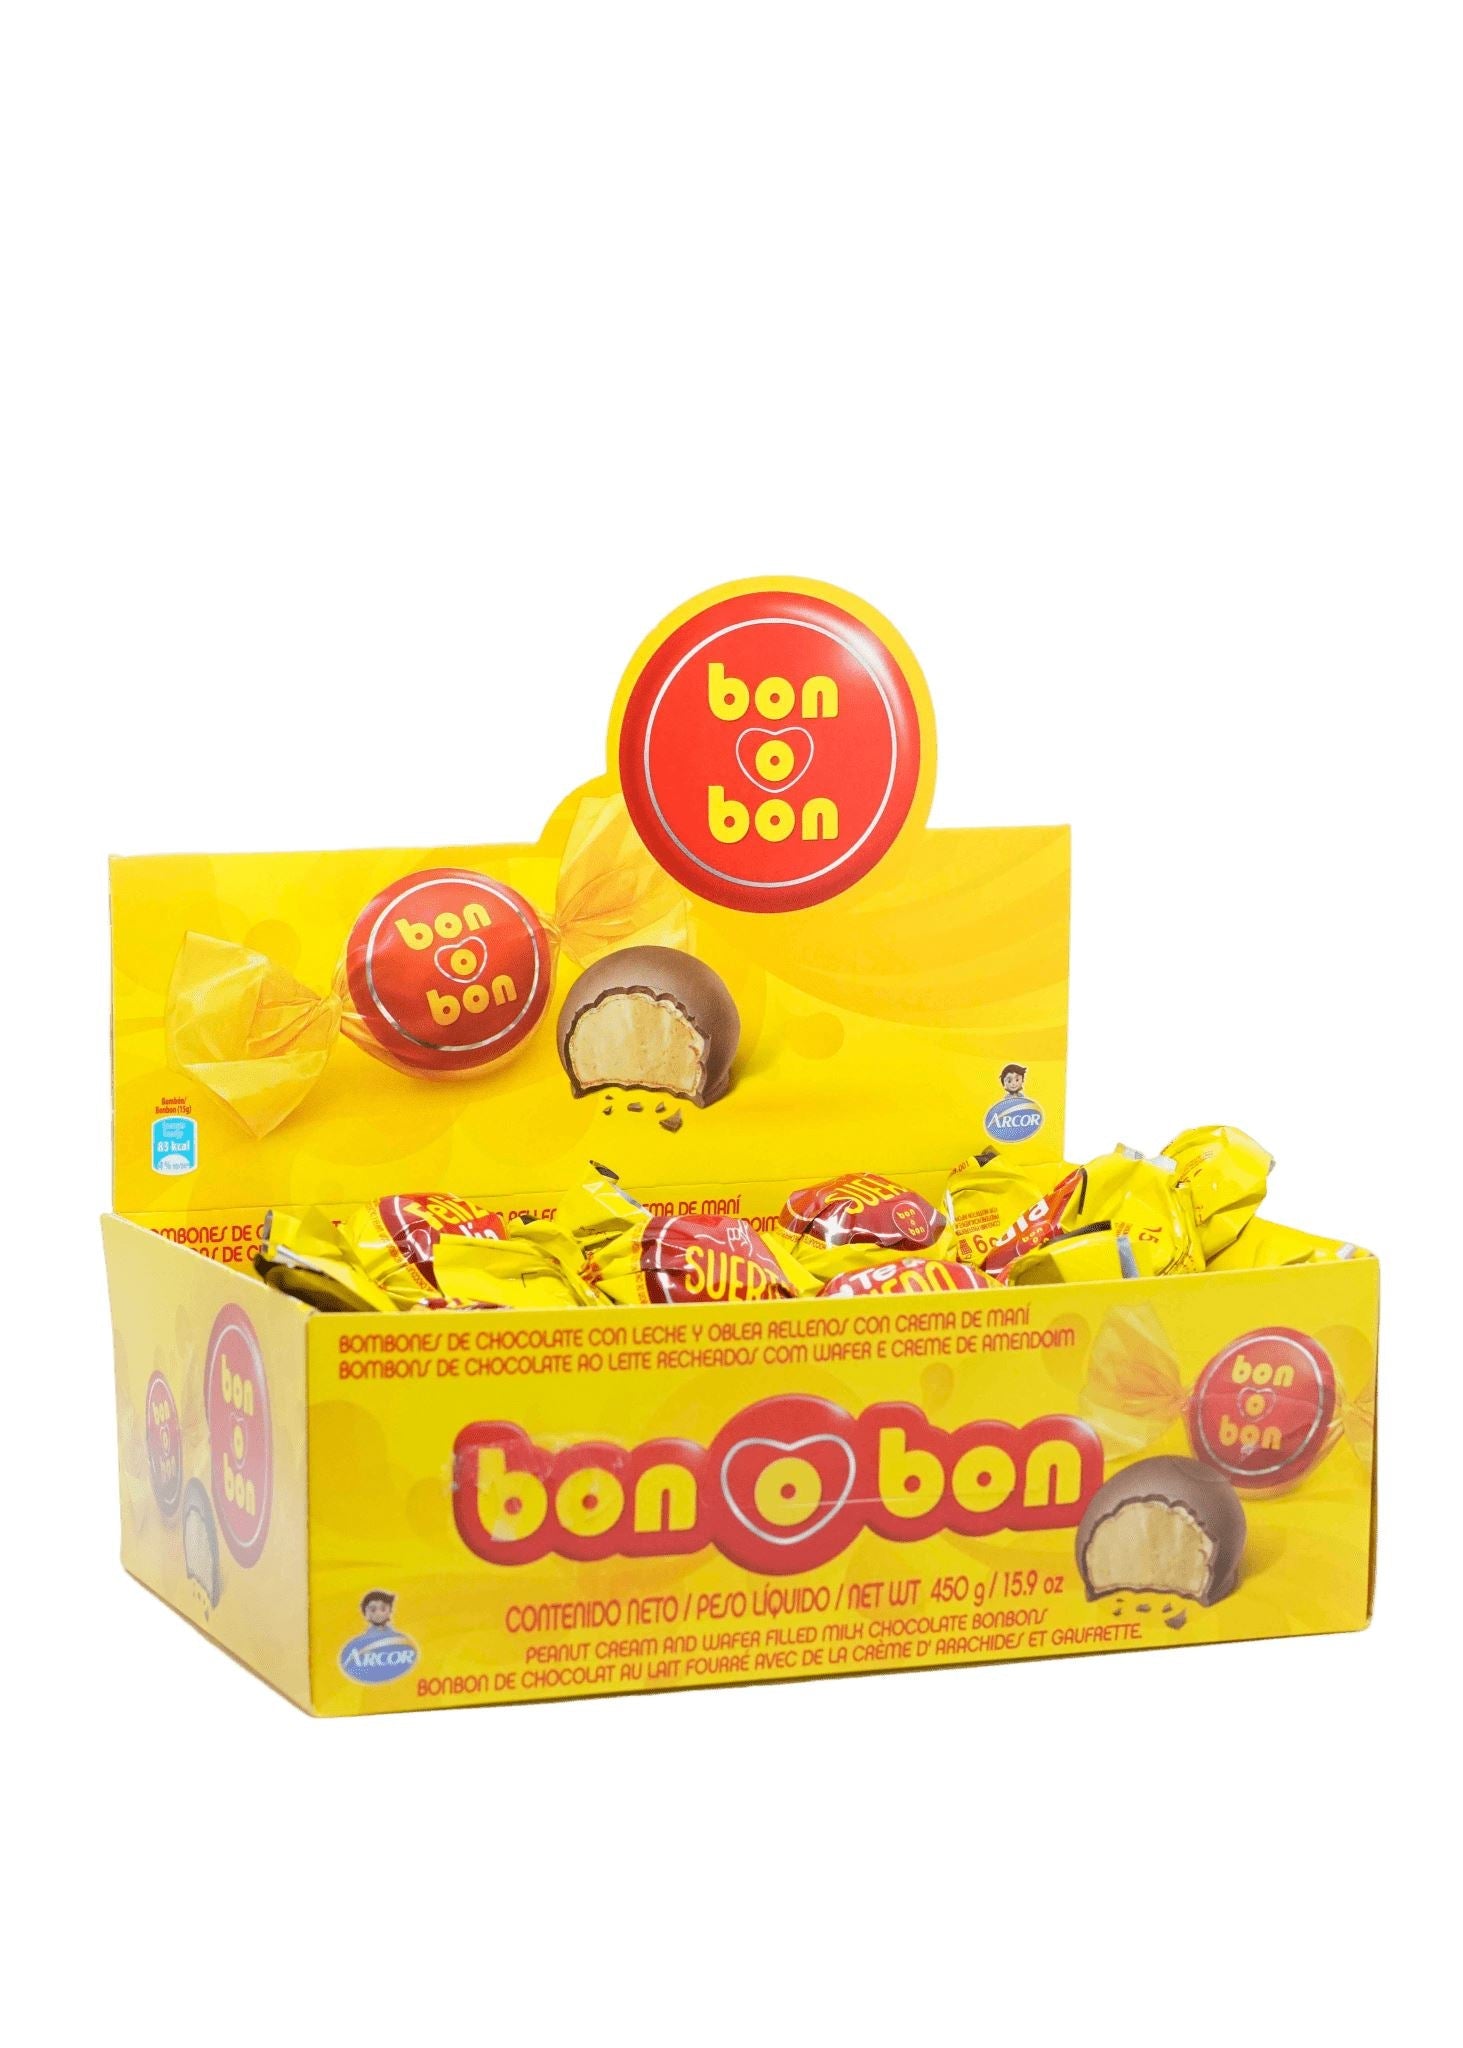 Bon o Bon - Chocolate bonbon with Peanut filling 15g Miscellaneous Arcor 